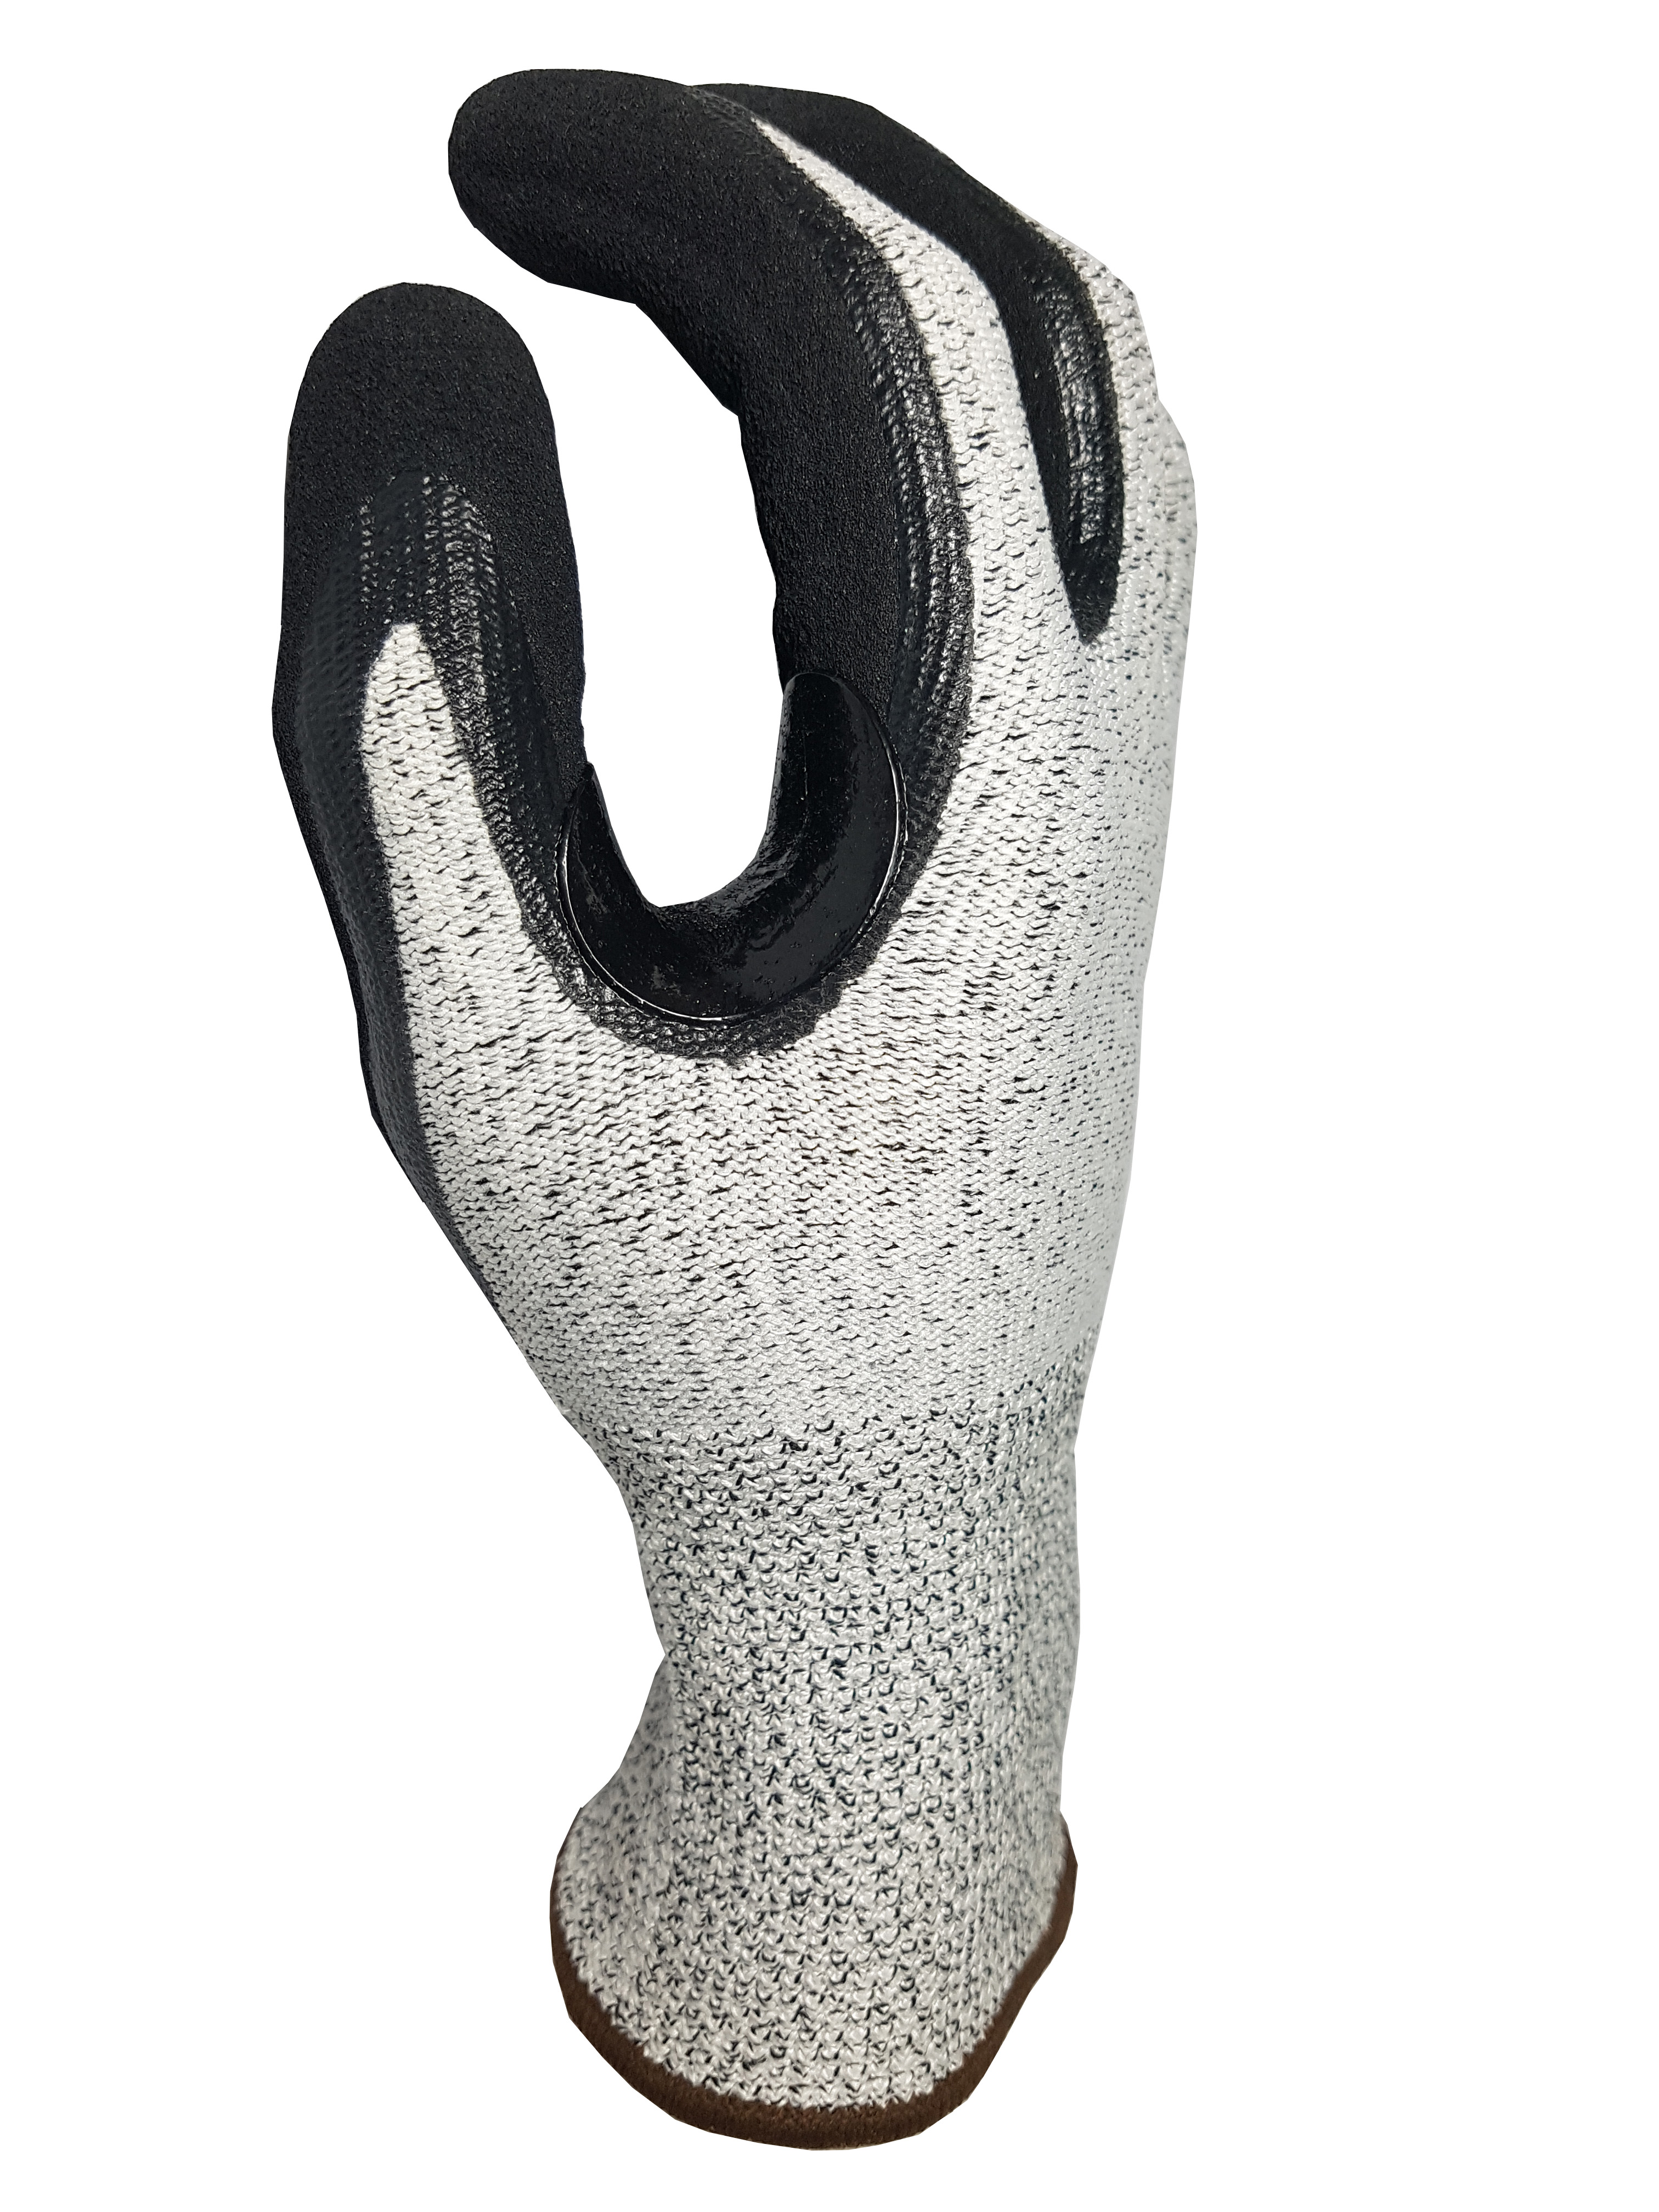 CUT 3 Black speckled Nitrile sandy(reinforcement patch) glove